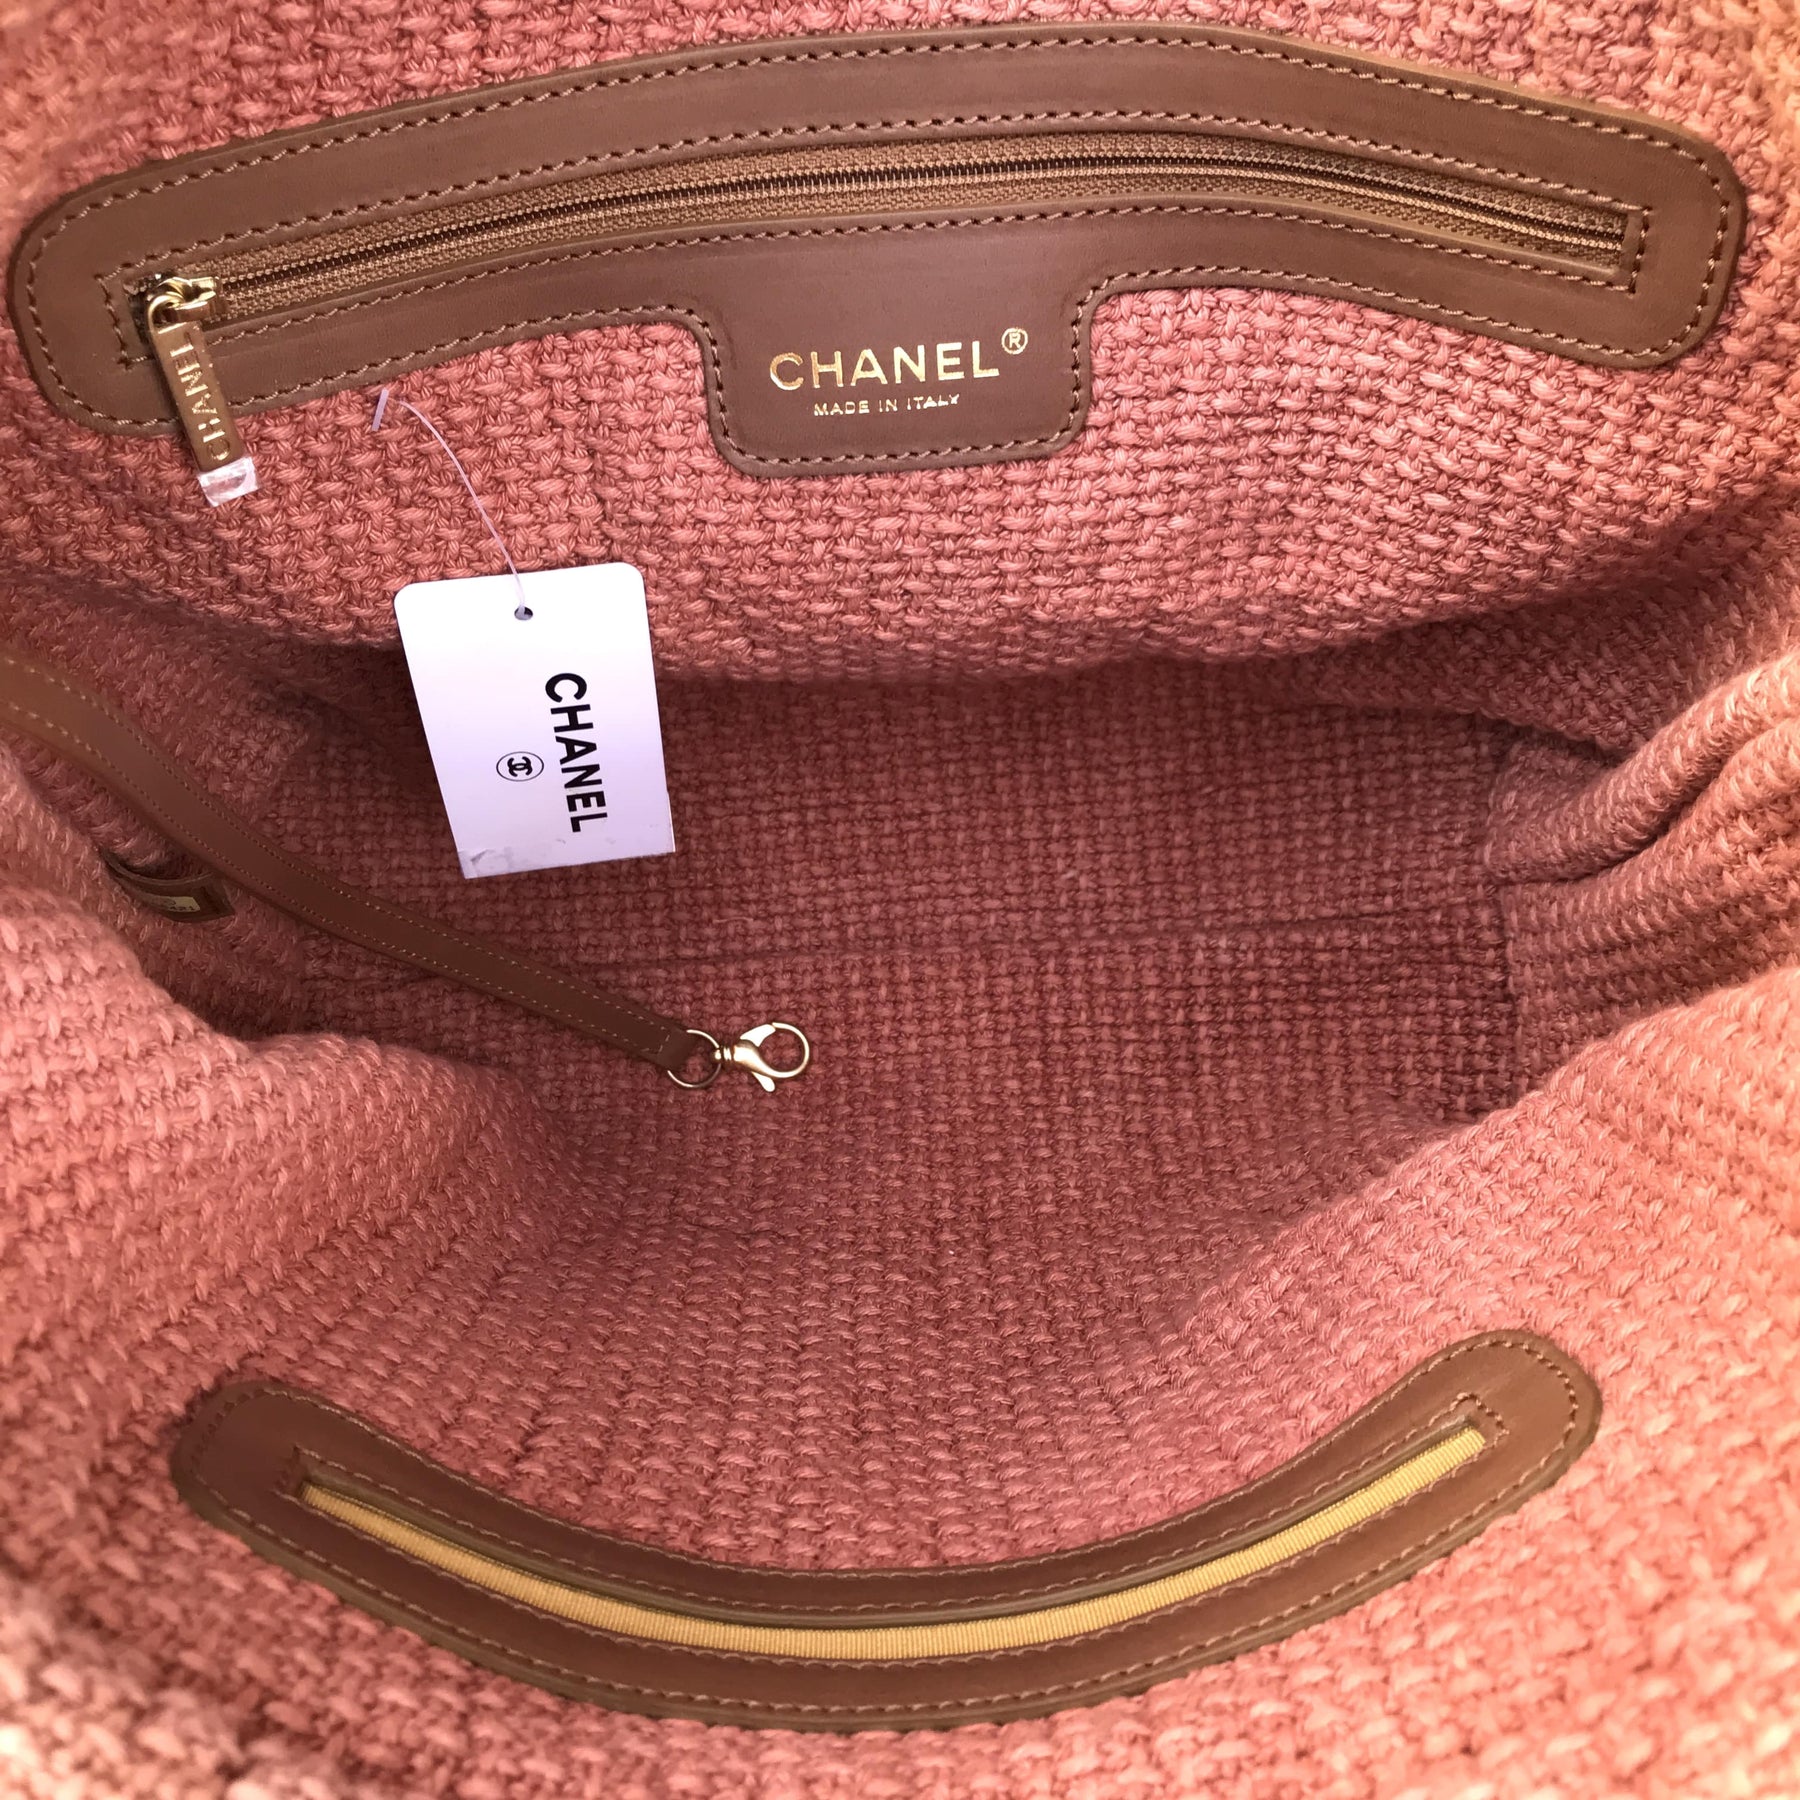 Handbags Today – Clothes Heaven Since 1983